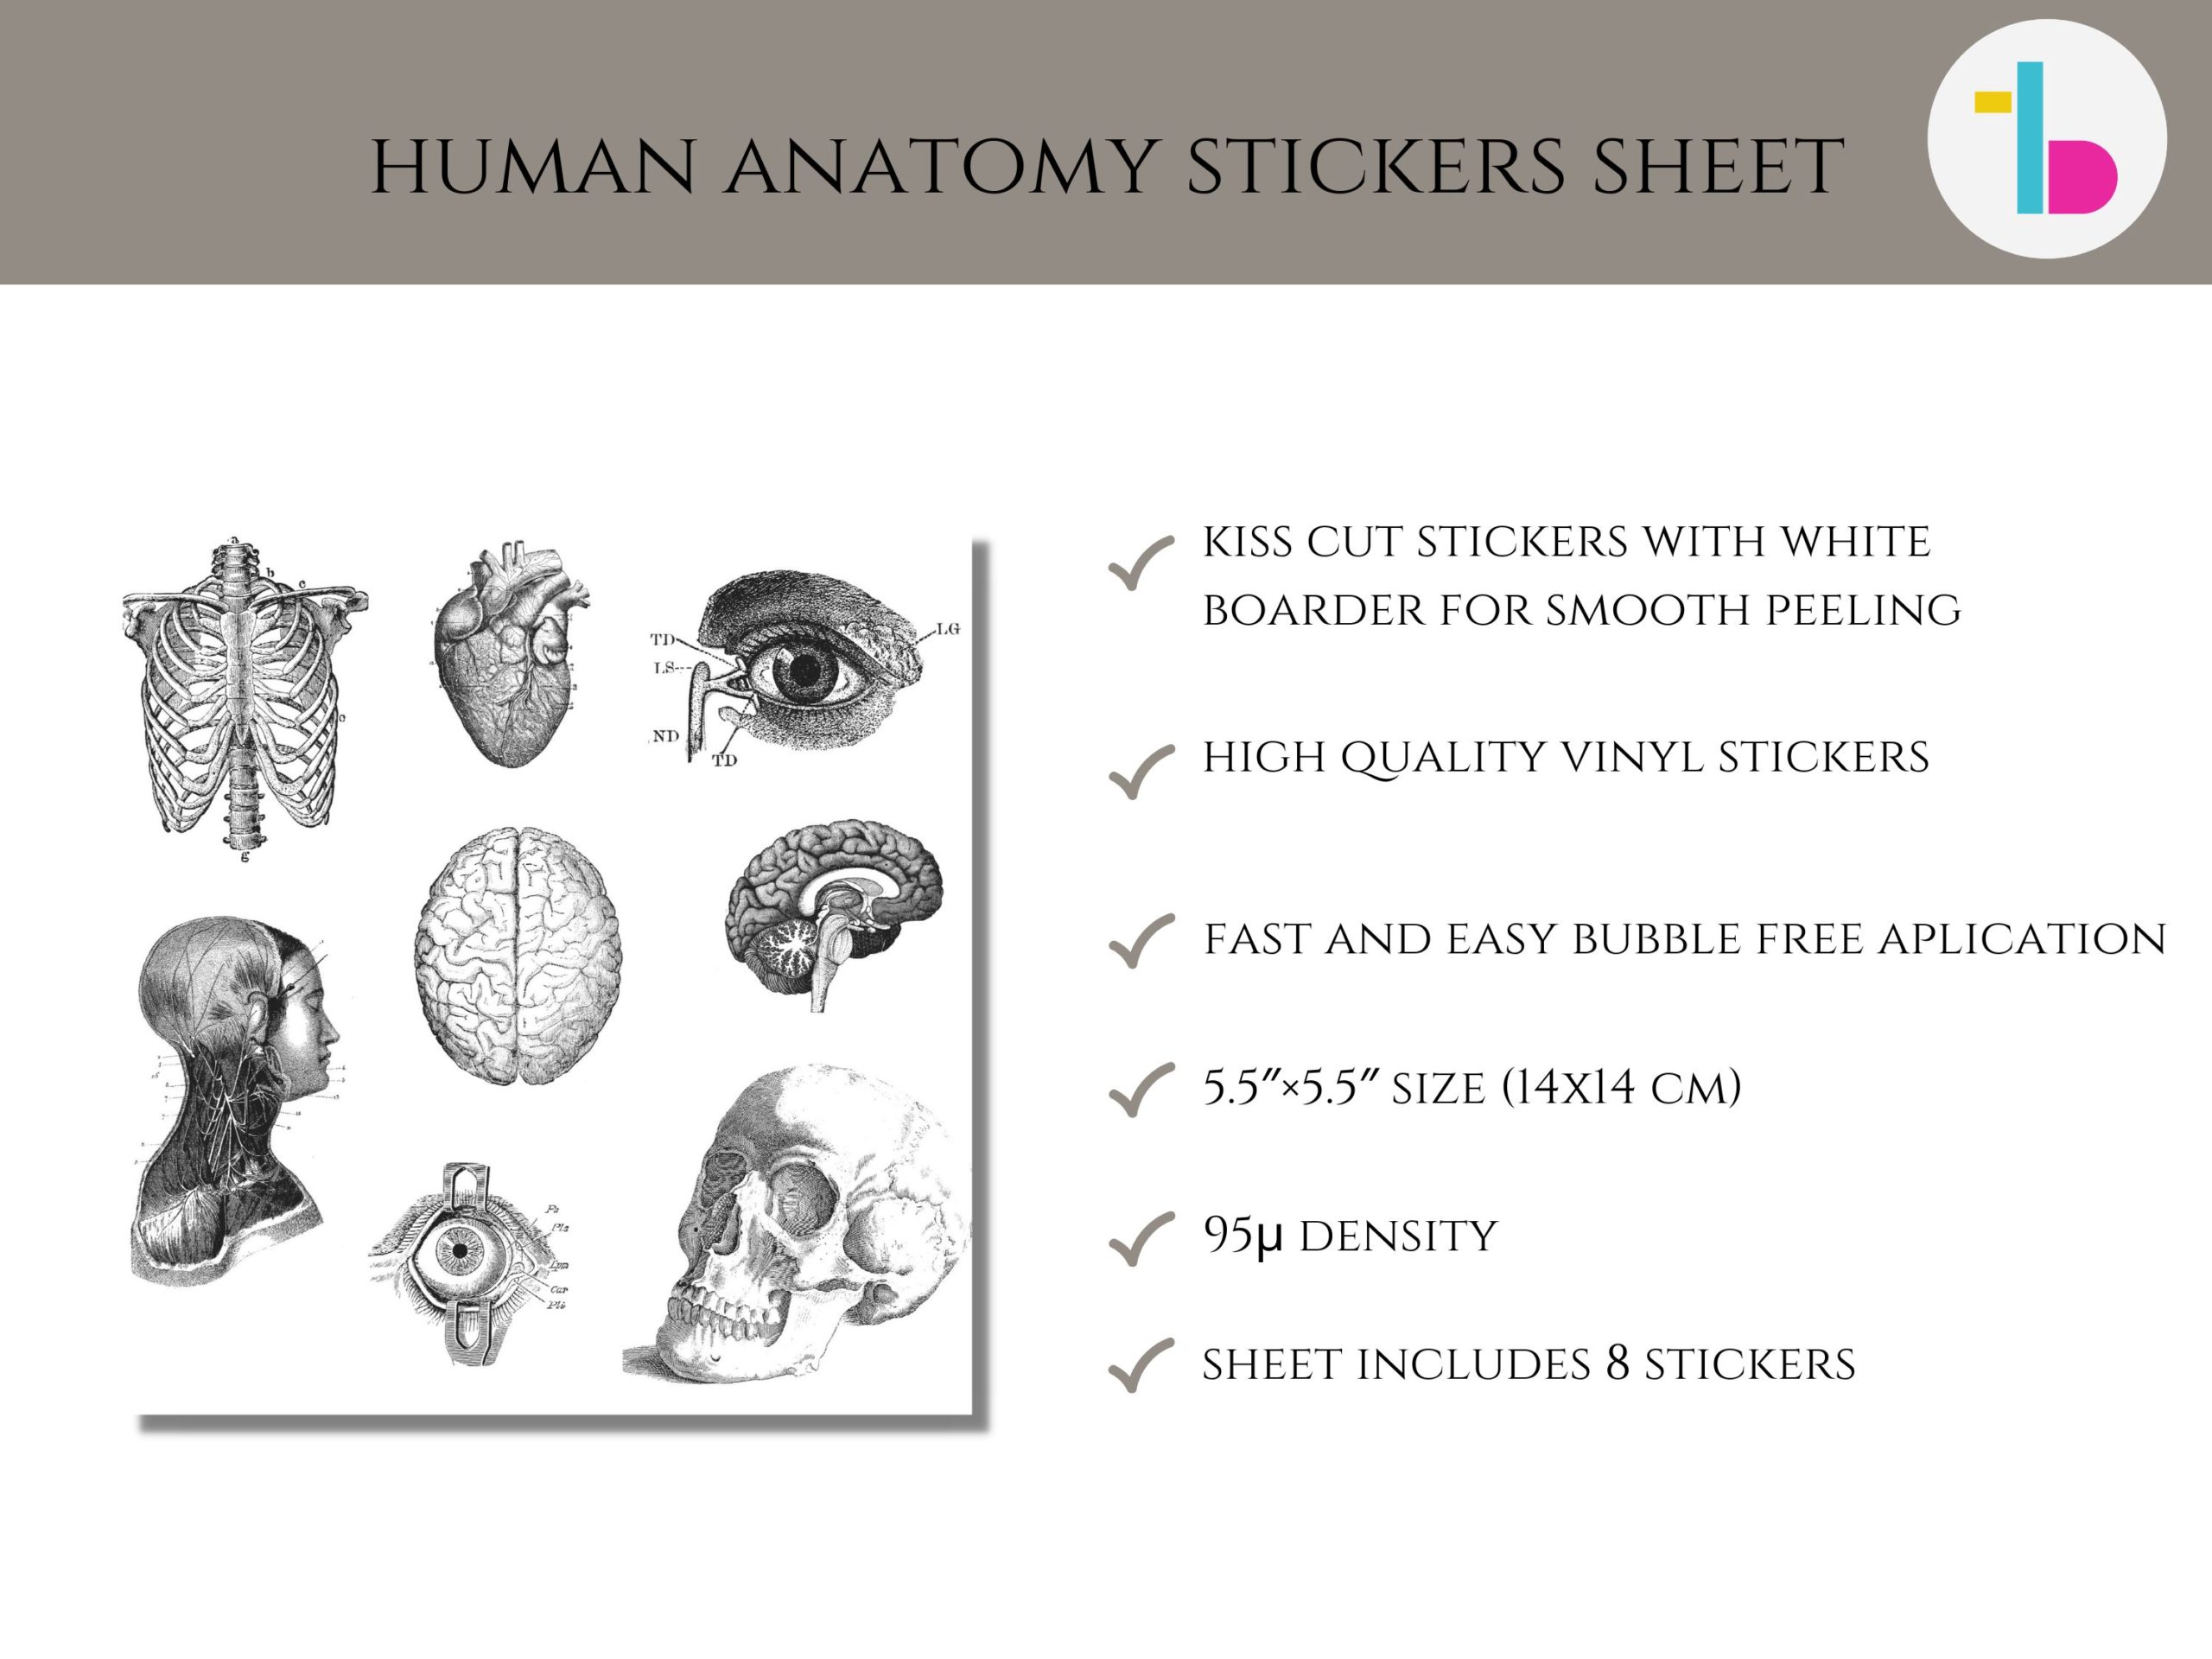 Human anatomy stickers